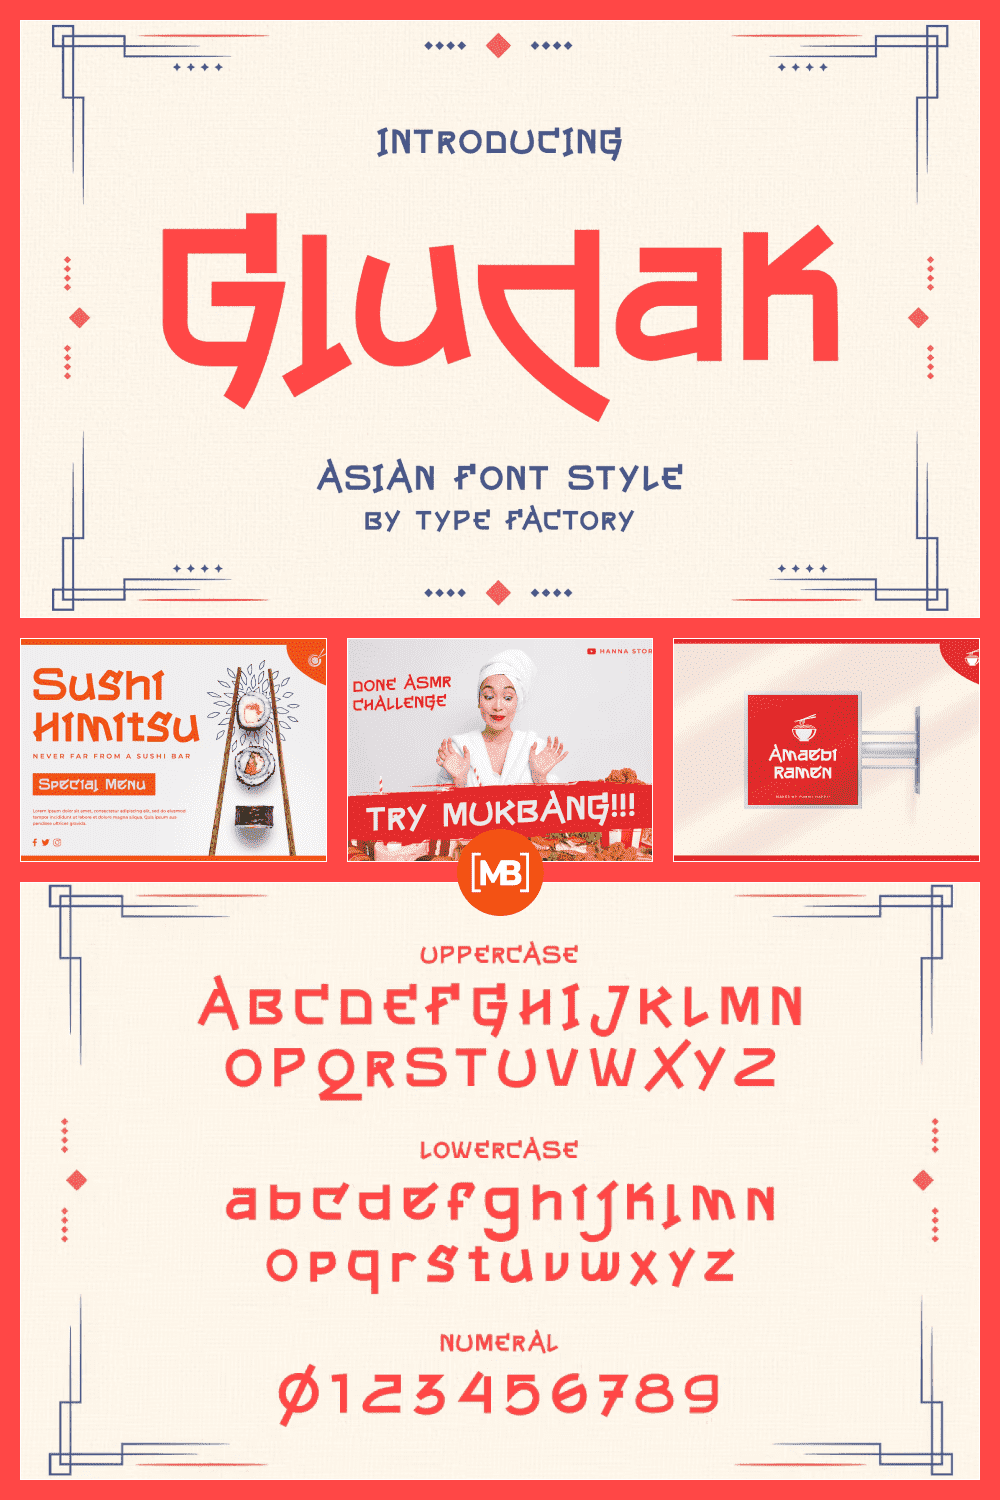 Gludak - Asian Font Style.